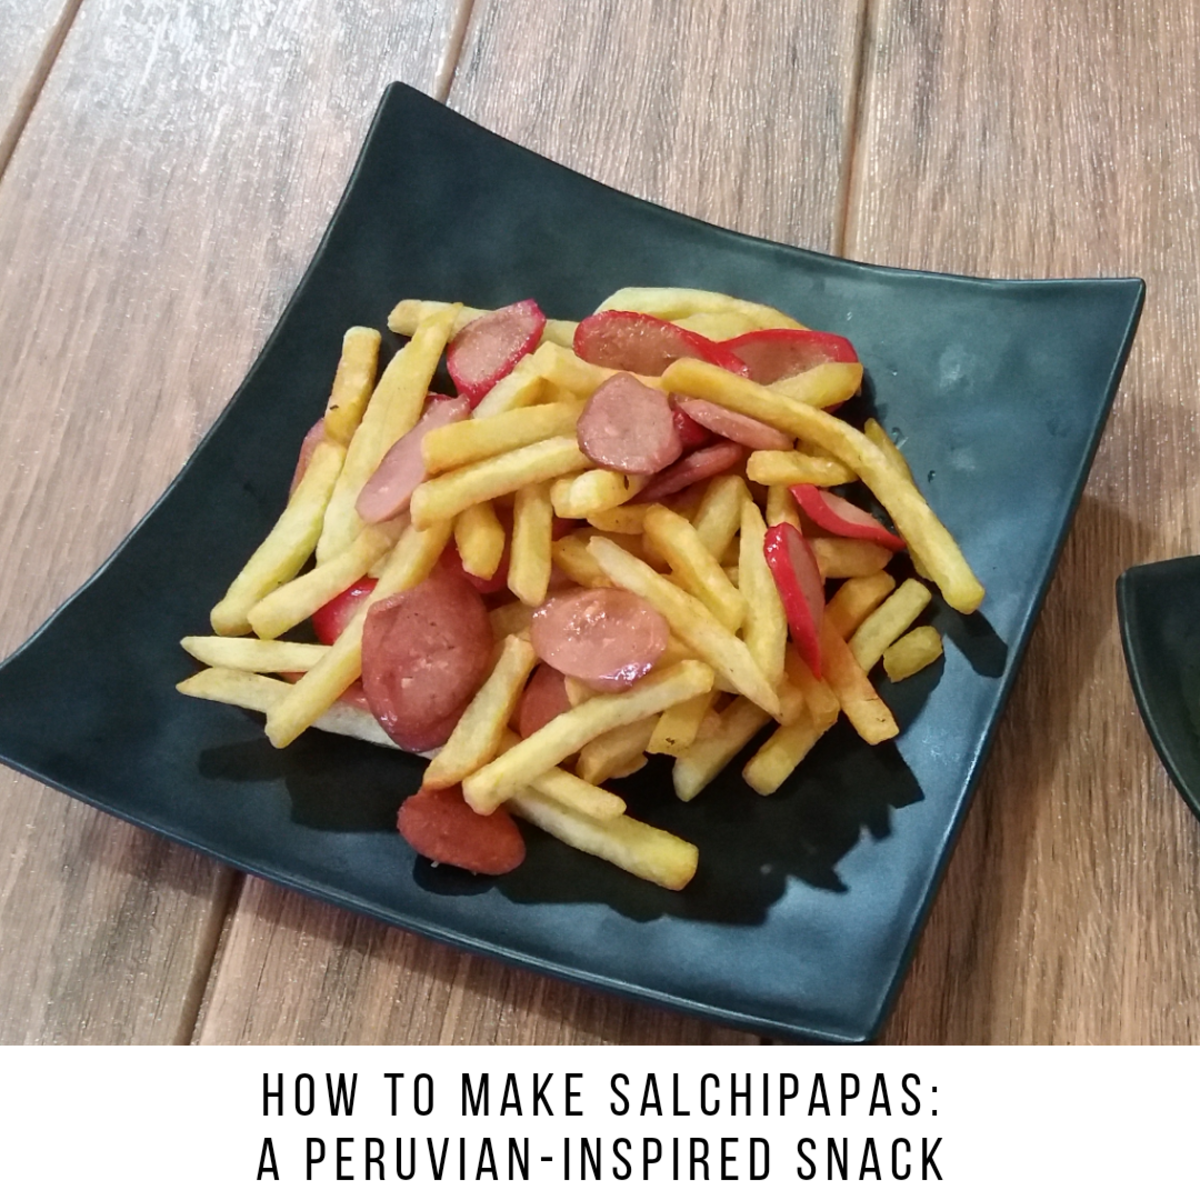 How to Make Salchipapas: A Peruvian-Inspired Snack